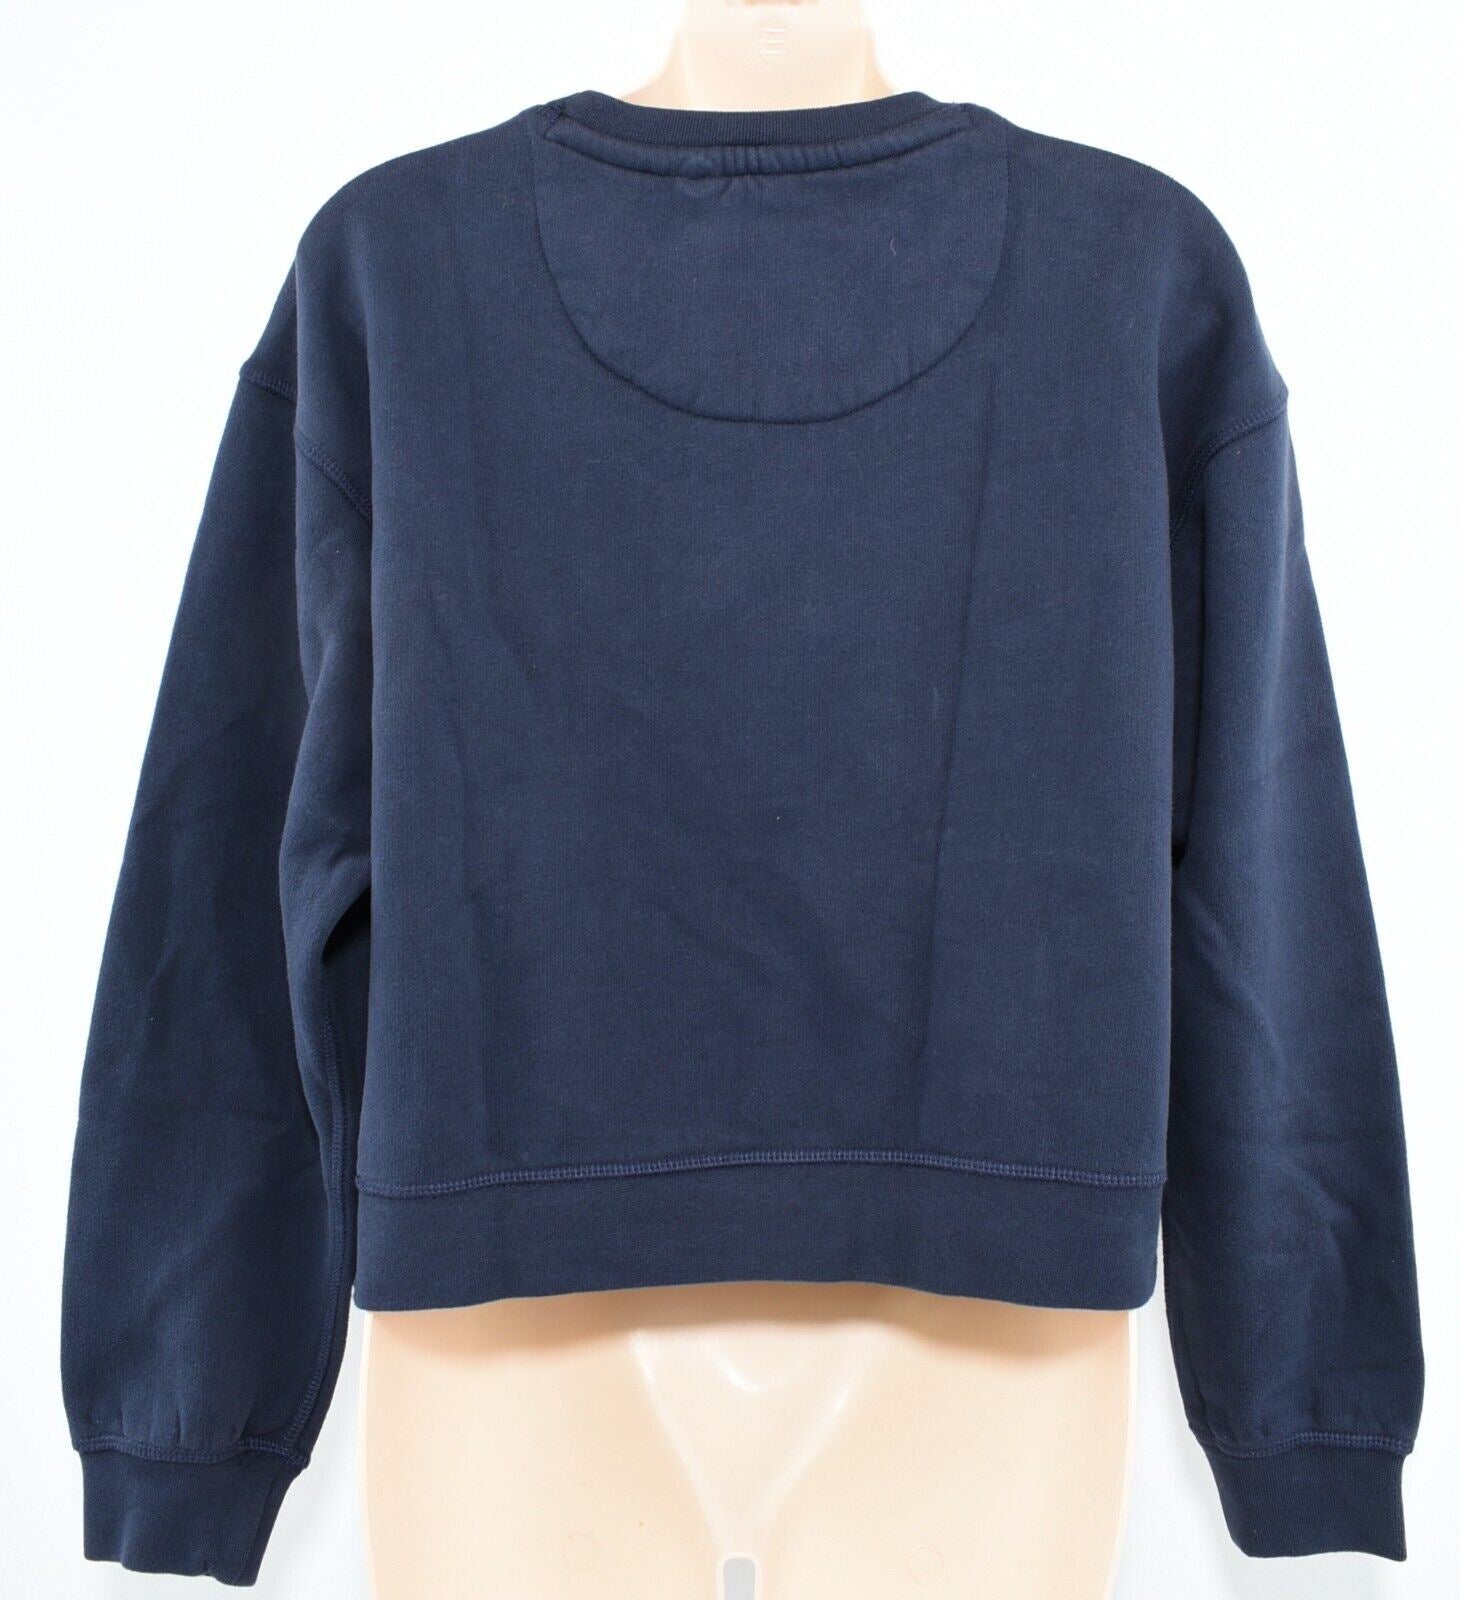 JACK WILLS Womens MELLOR Cropped Sweatshirt, Navy Blue, size XS /UK 8